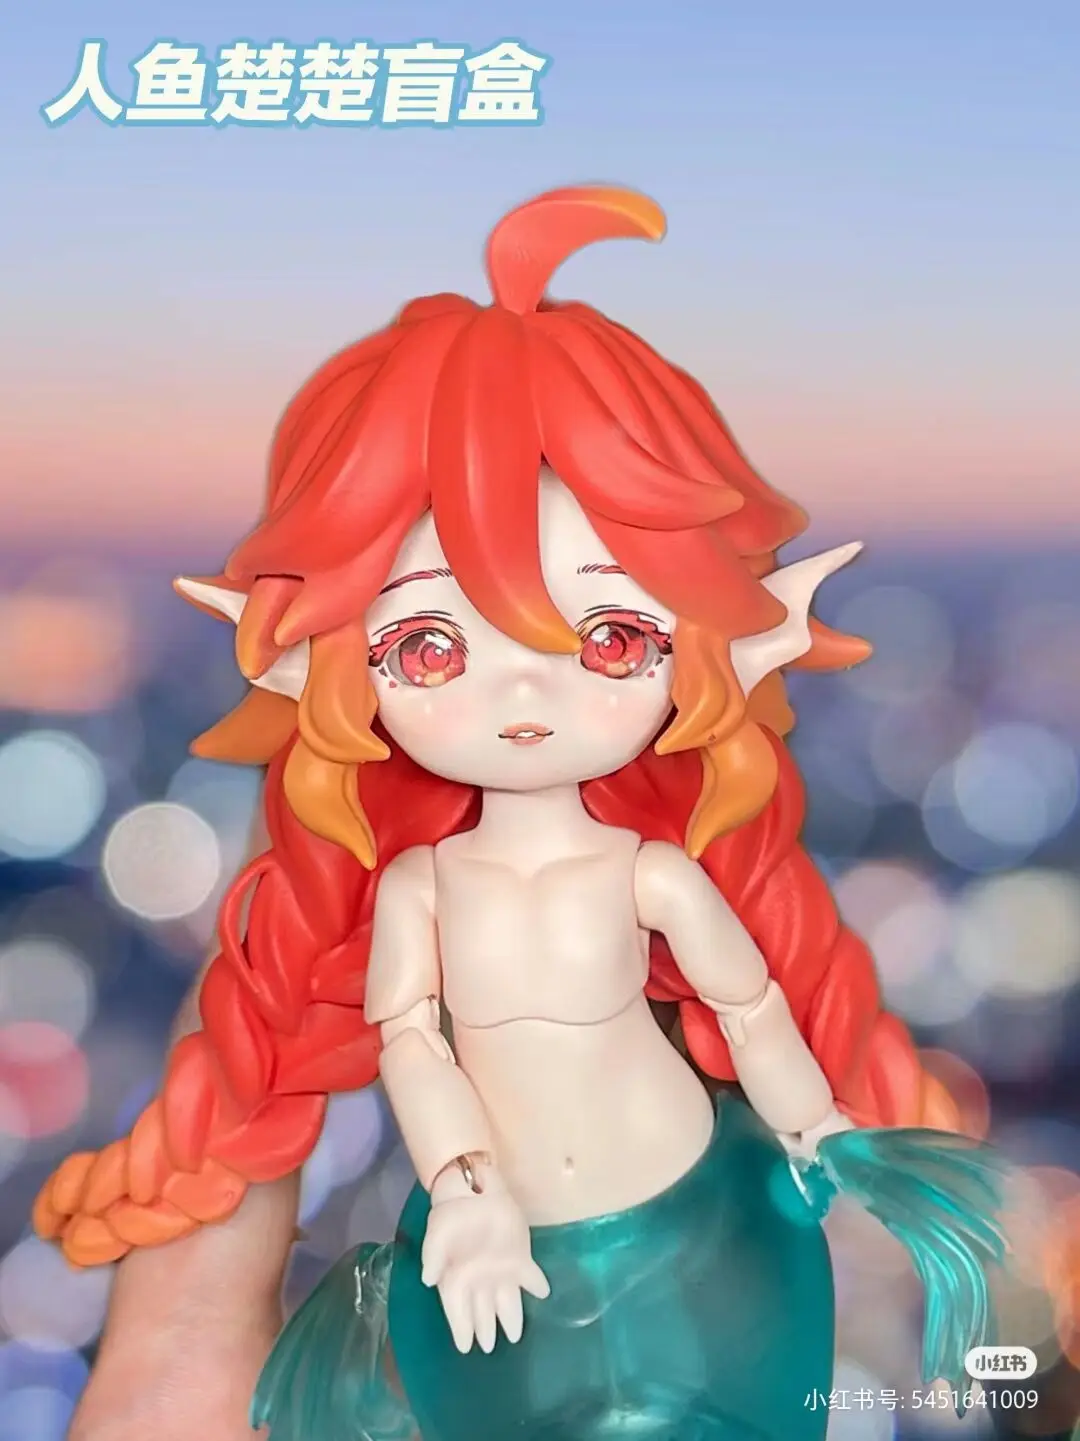 

Mermaid Blind Box 1/12 Bjd Doll Kawaii Chu Chu Anime Action Figurine Mystery Toy Surprise Guess Bag Collectble Kid Girl Gift